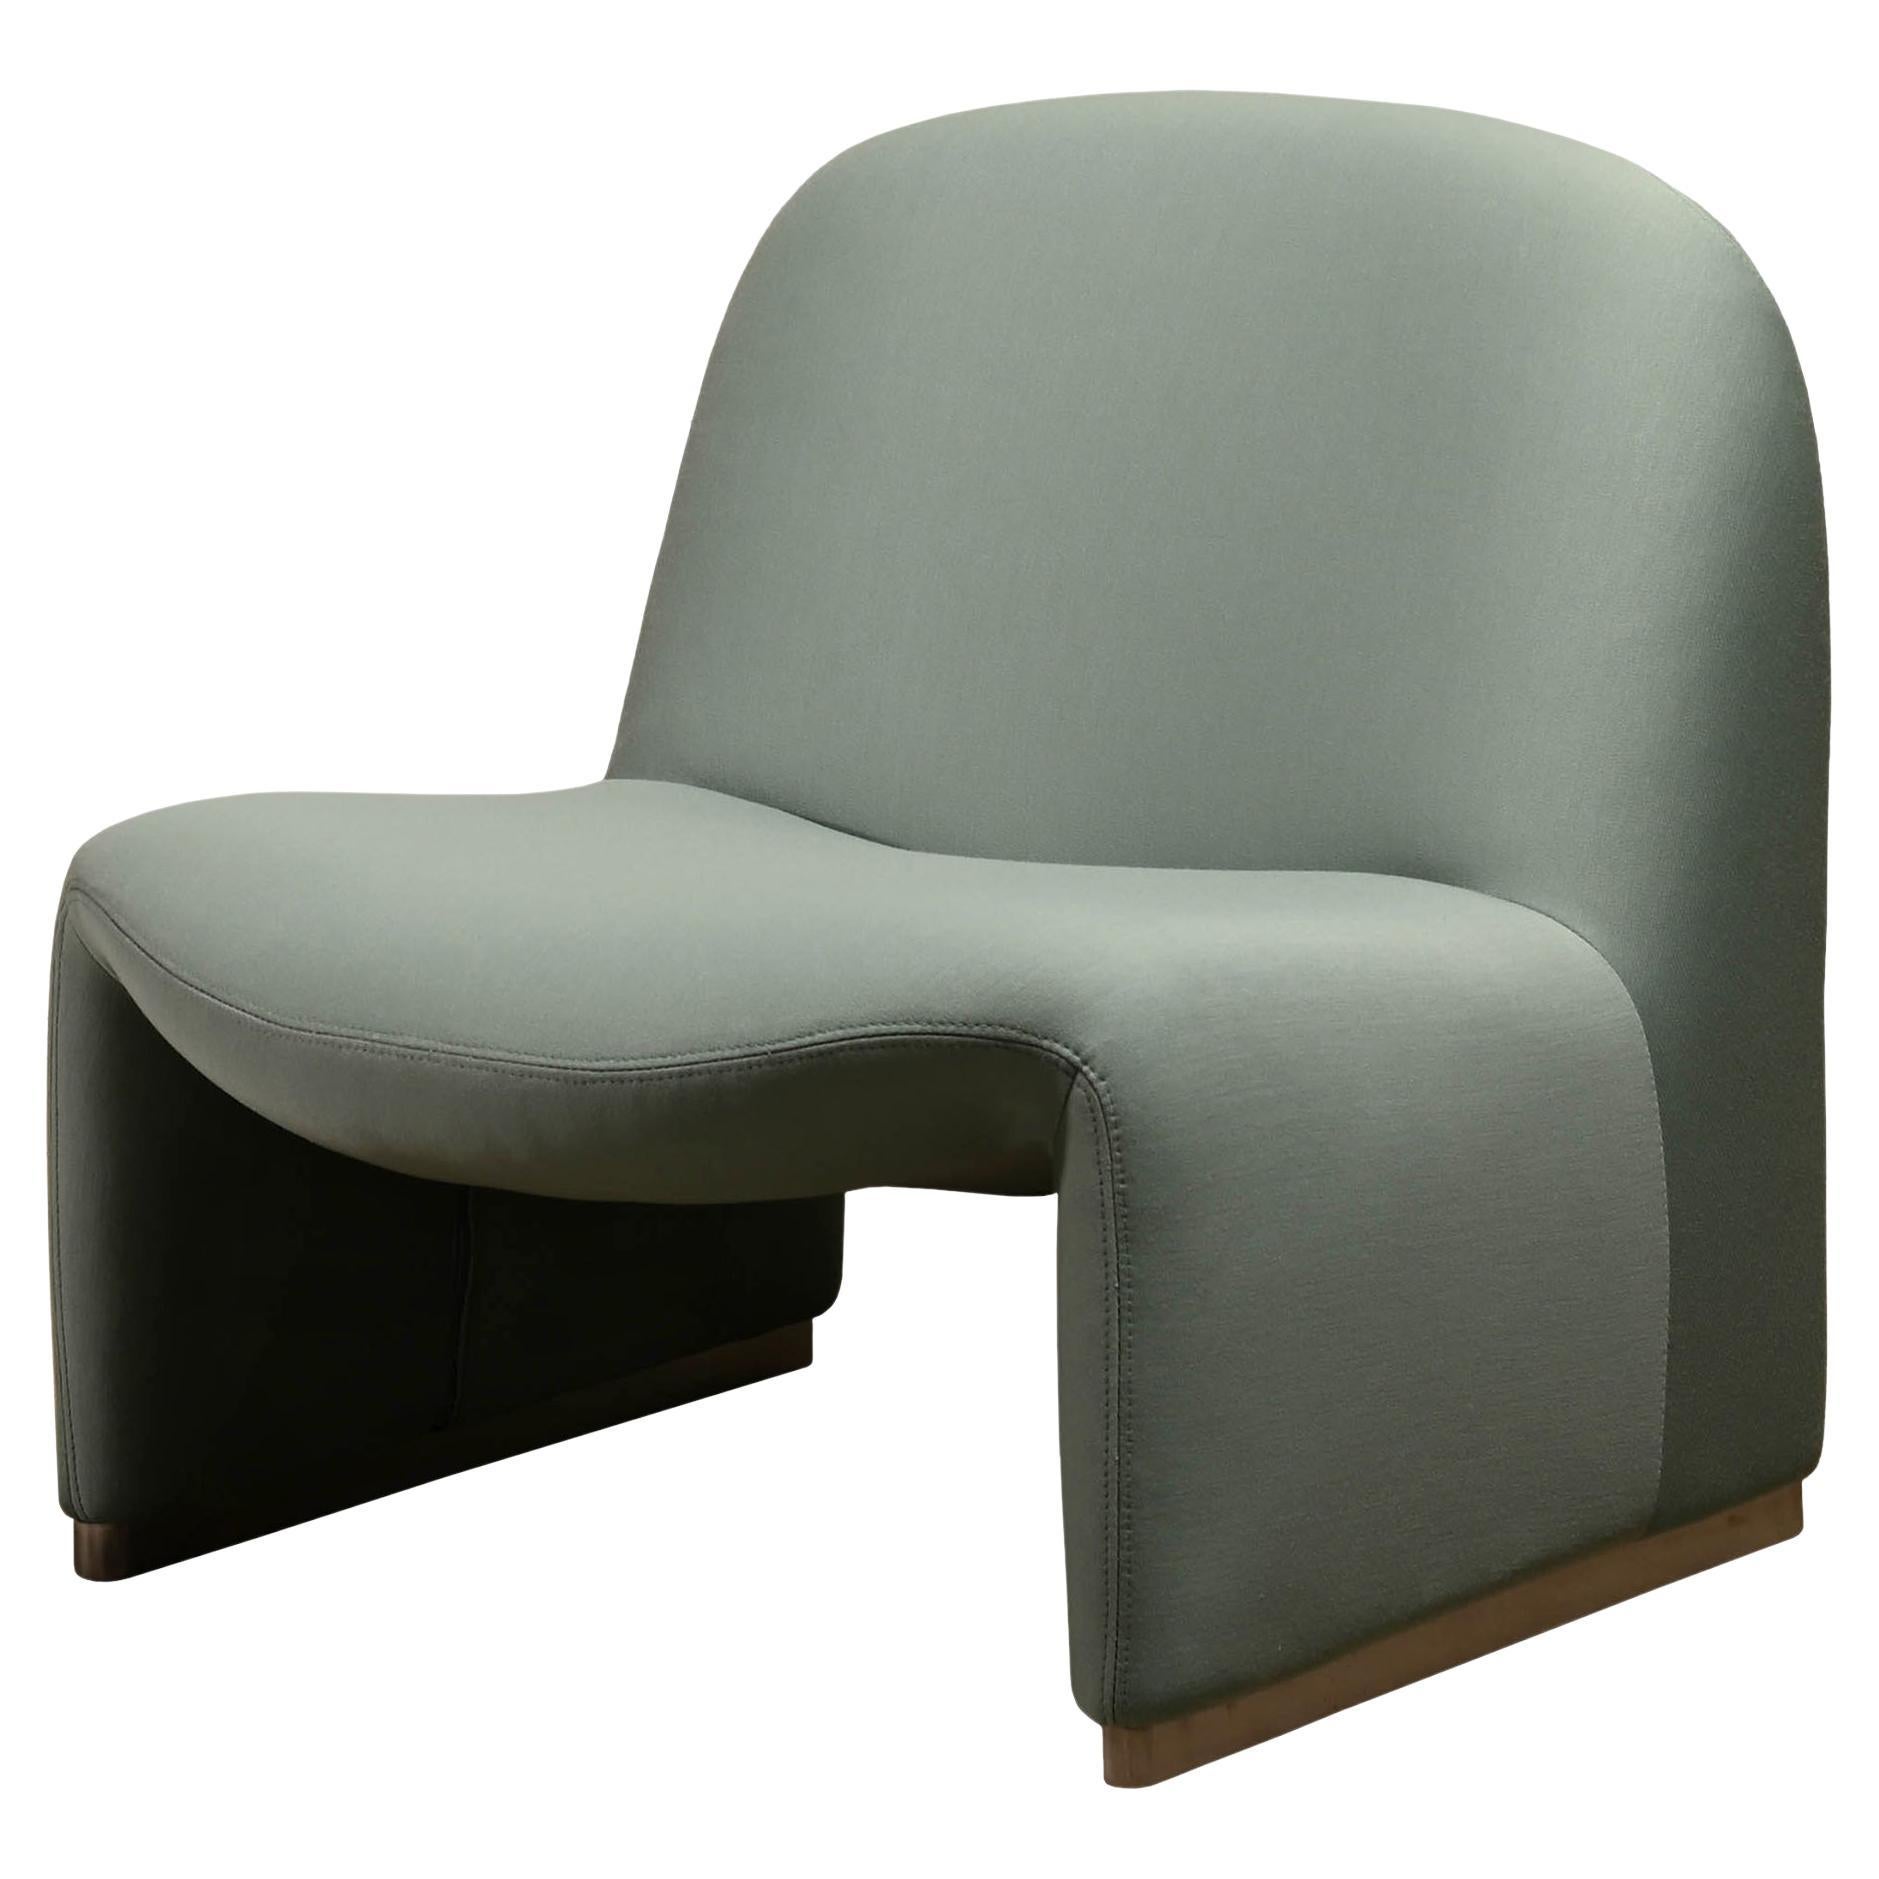 Giancarlo Piretti Alky Lounge Chair in Green Kvadrat Fabric, Artifort